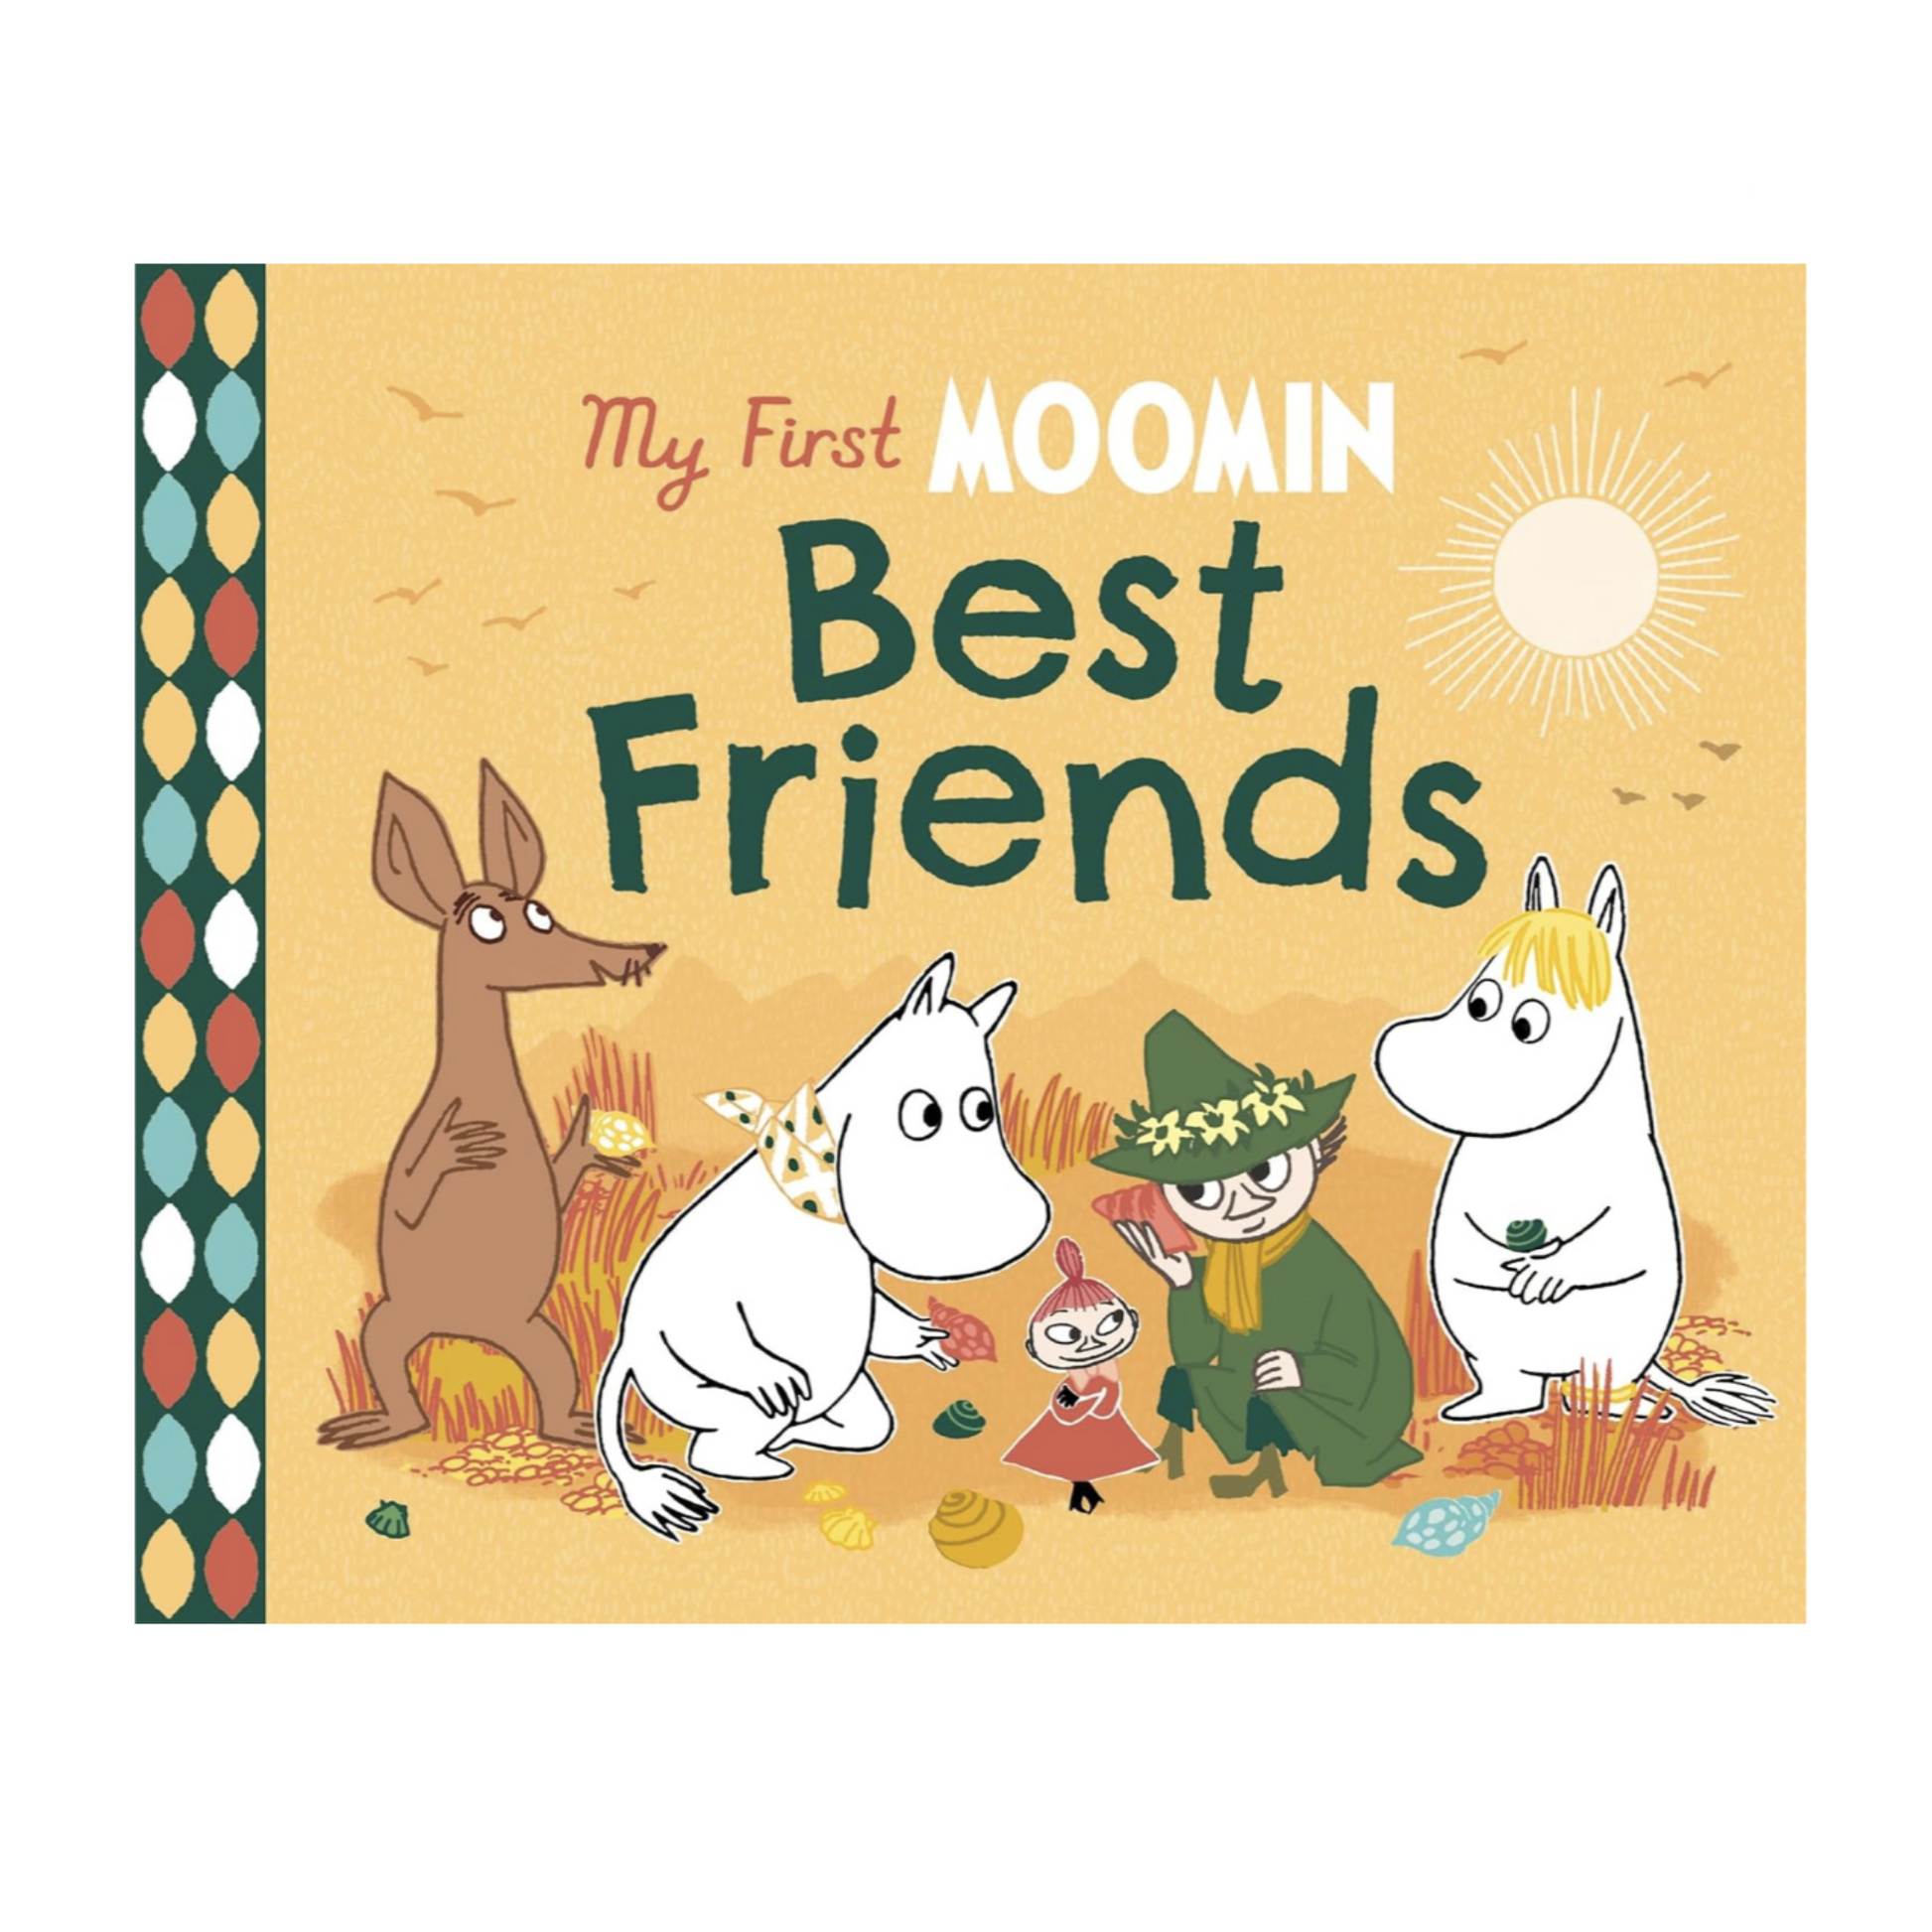 My First Moomin Best Friends (8917500330271)